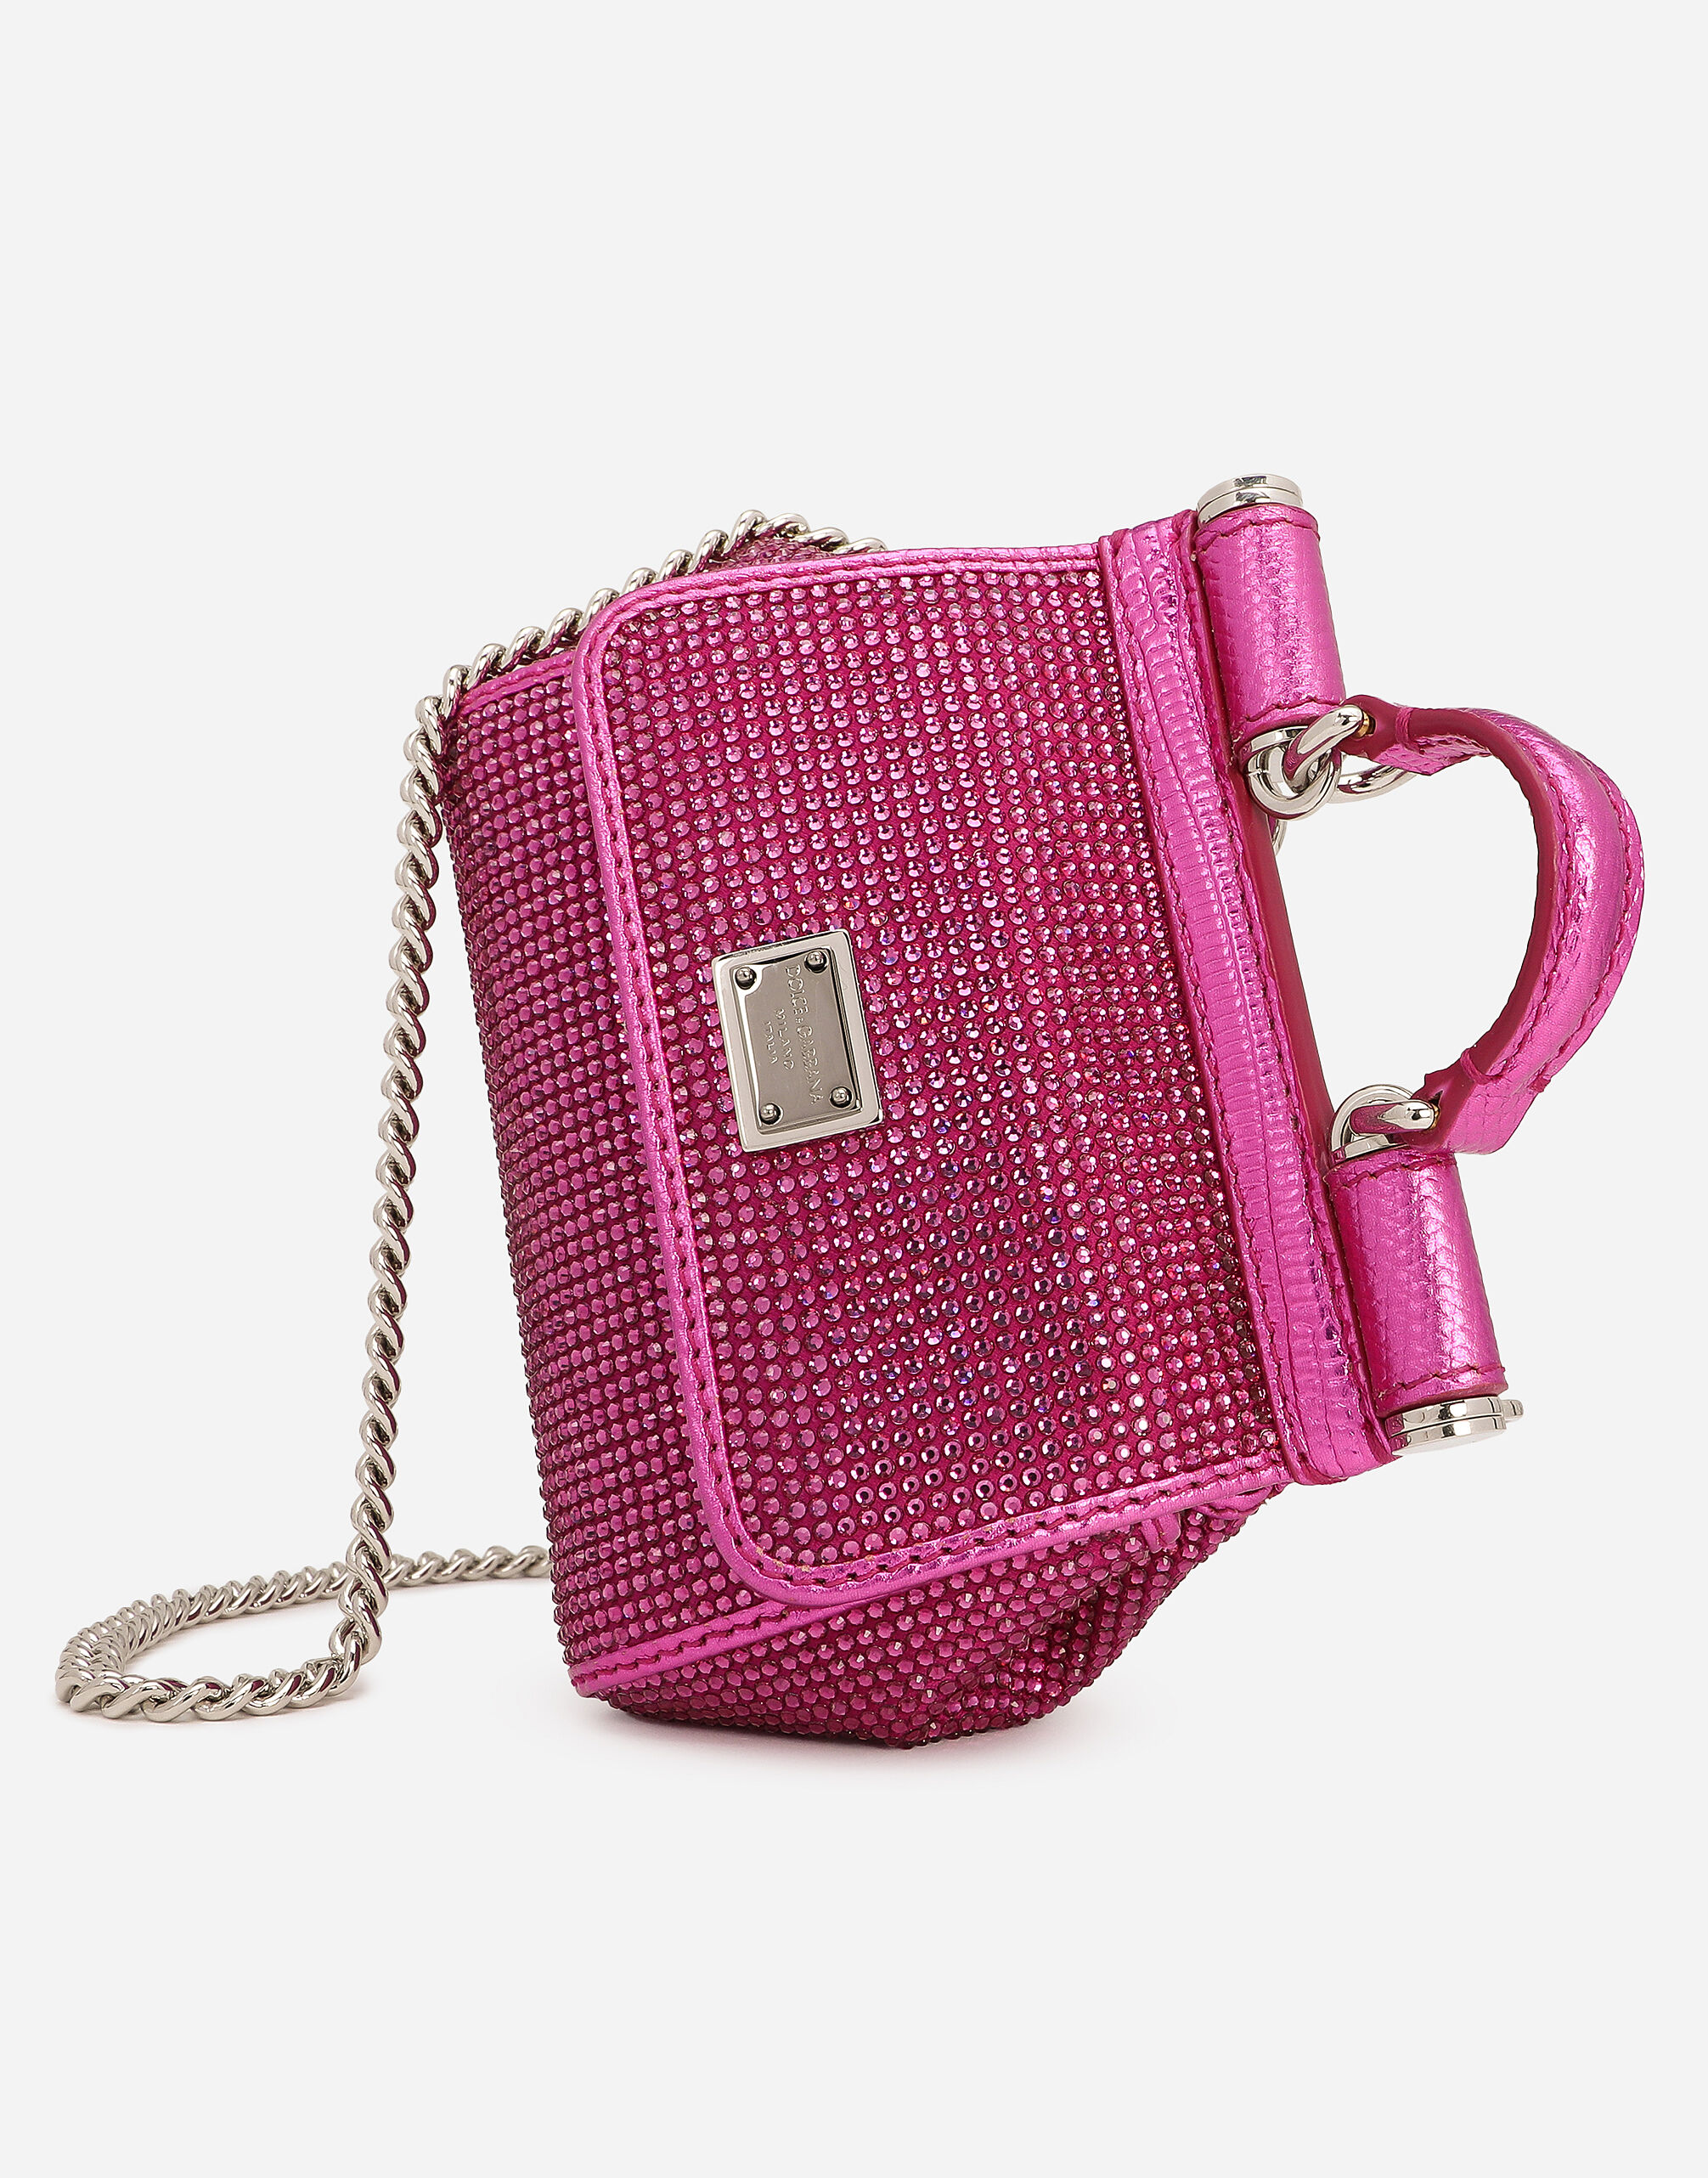 Mini Sicily handbag in Fuchsia for Women | Dolce&Gabbana®